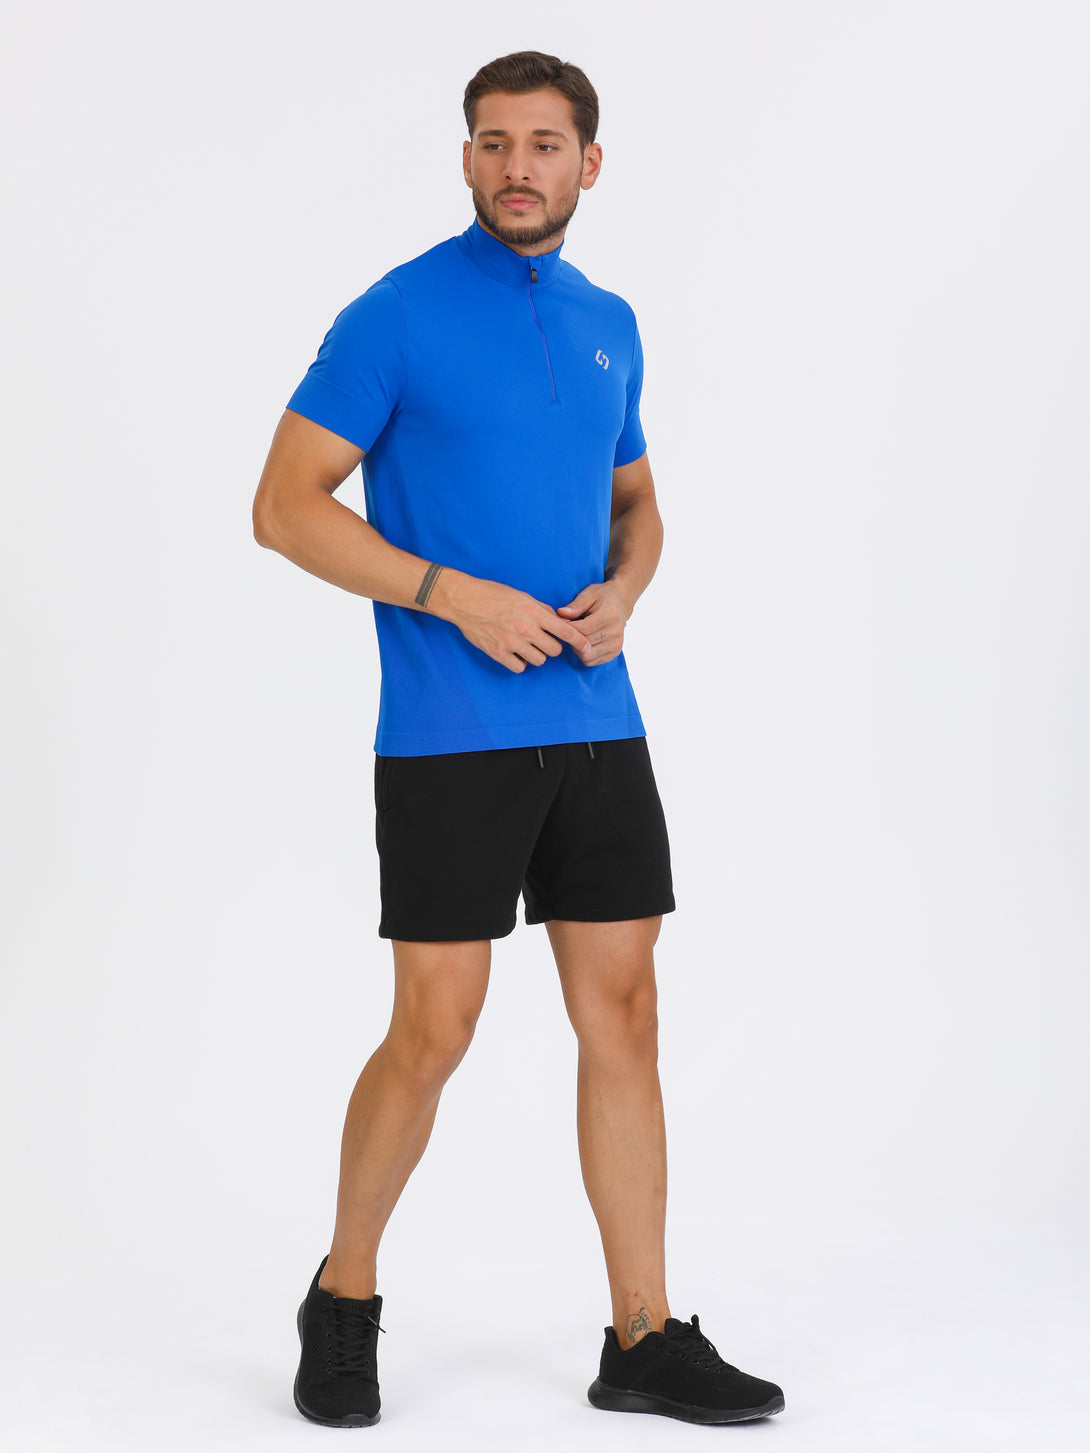 A Man Wearing Lapis Blue Color Seamless Short Sleeve Zipped T-Shirt